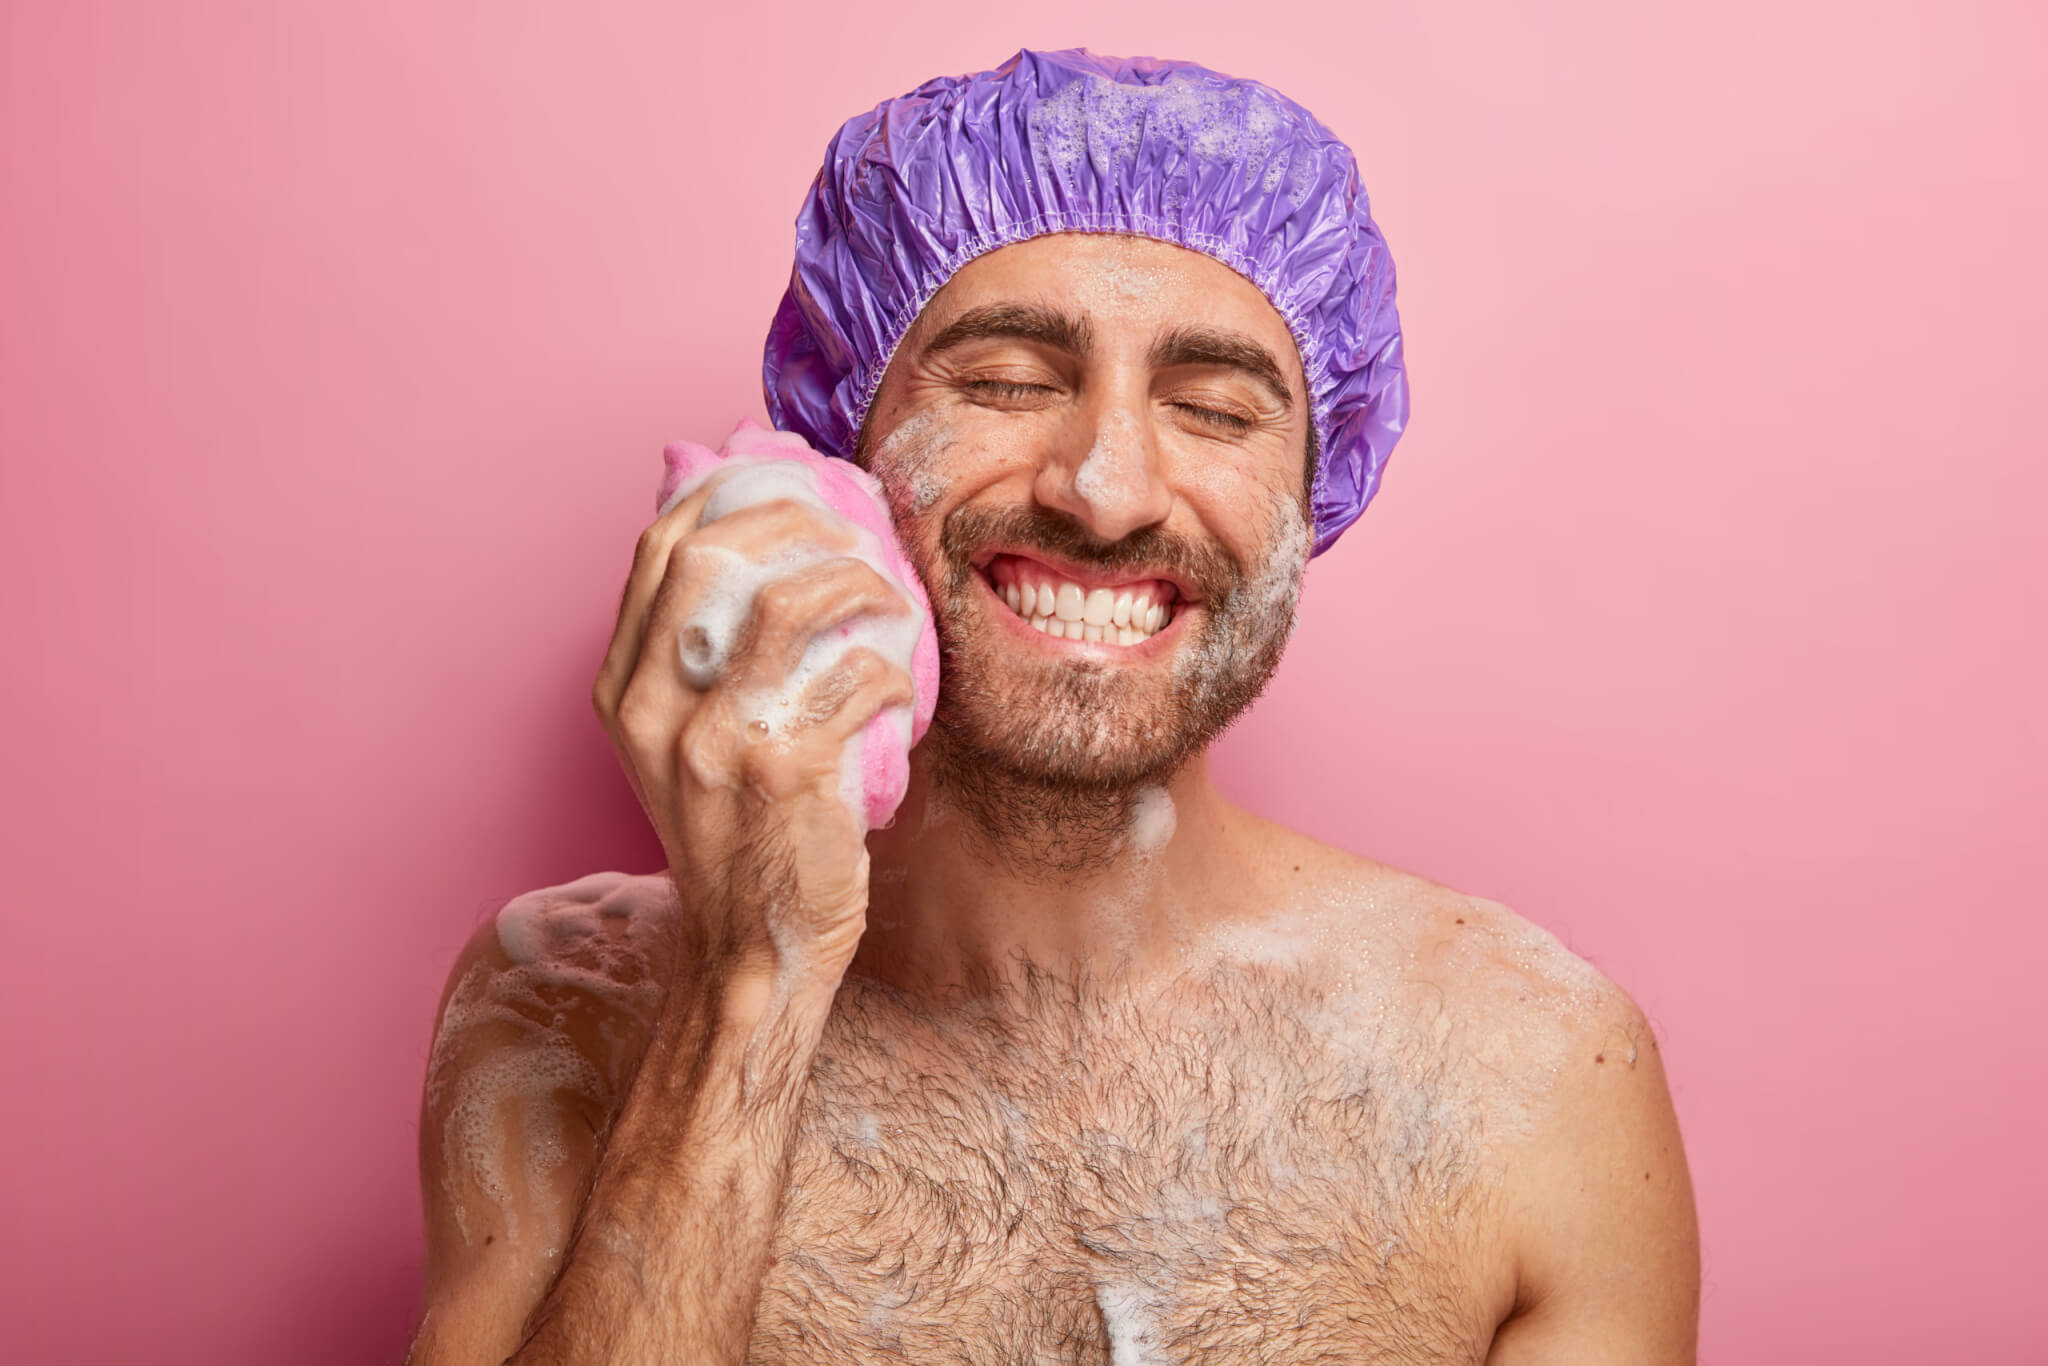 Man washing his face, taking shower or bath